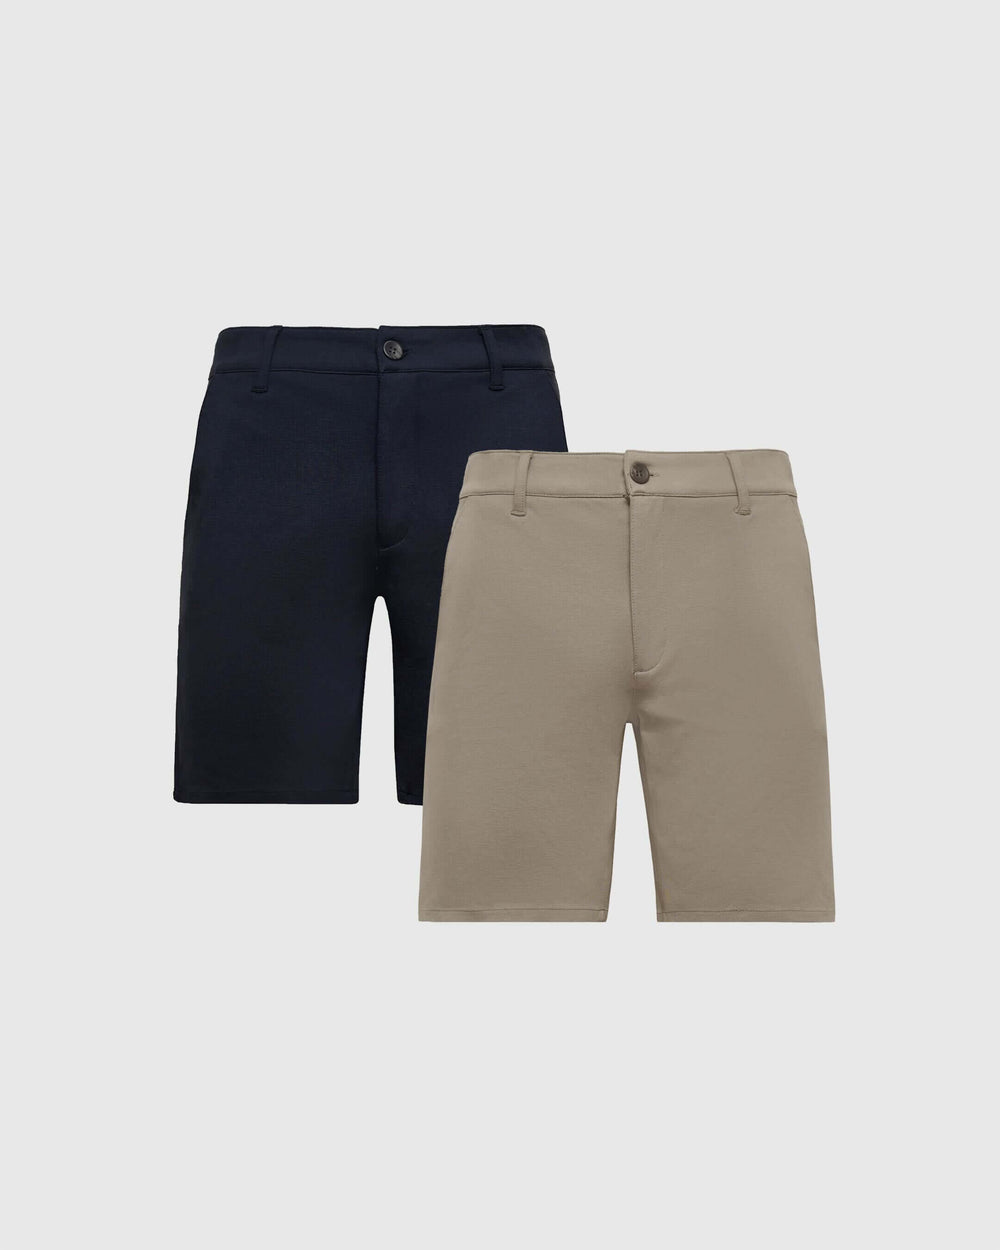 9" Khaki & Navy Comfort Knit Chino Shorts 2-Pack